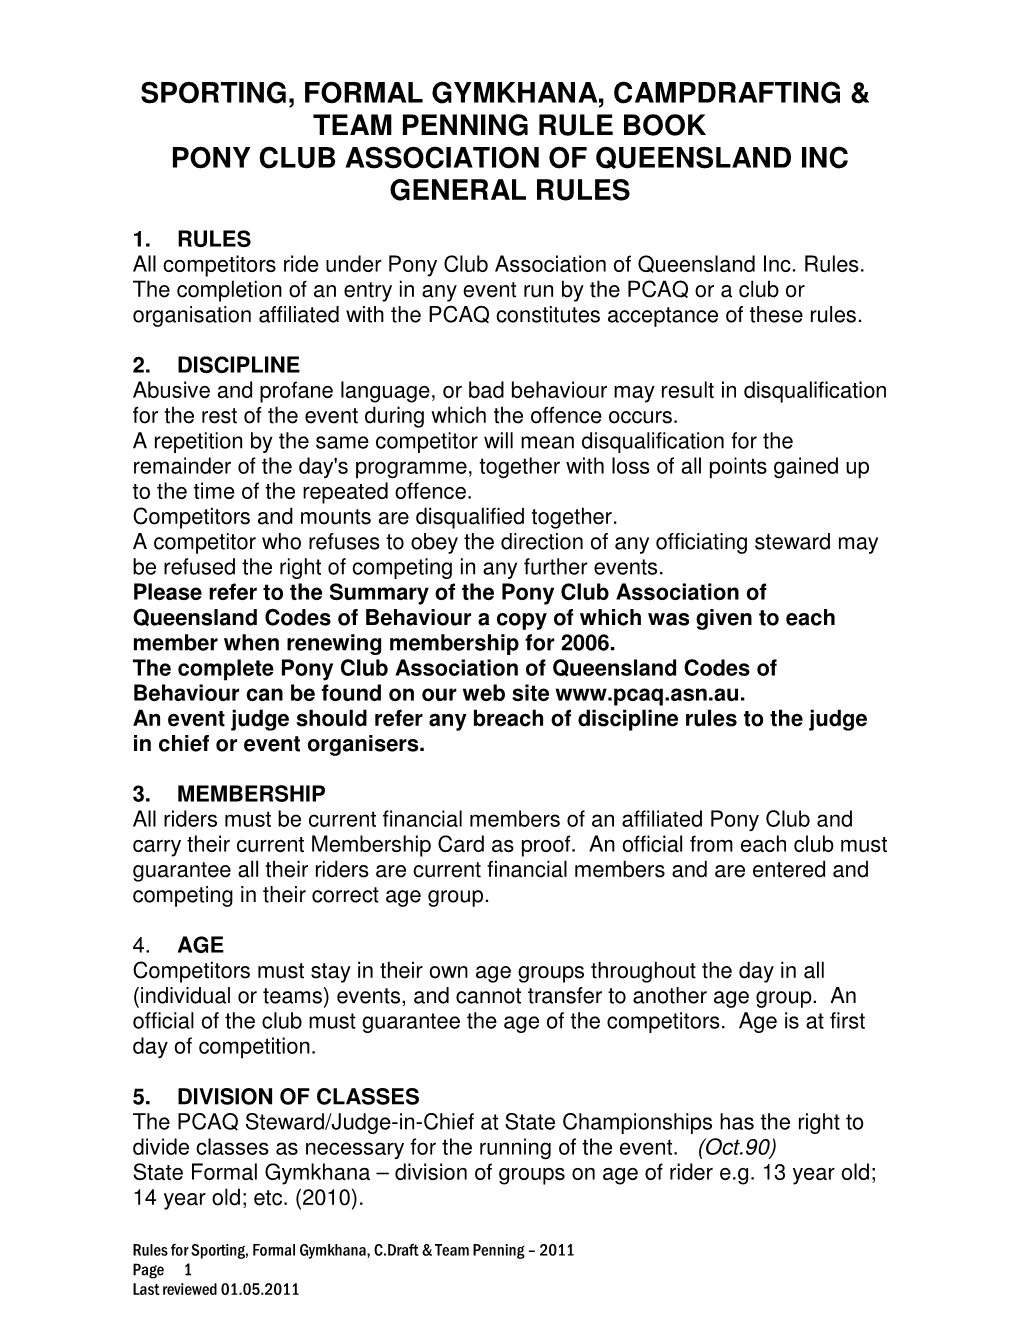 Sporting, Formal Gymkhana, Campdrafting & Team Penning Rule Book Pony Club Association of Queensland Inc General Rules